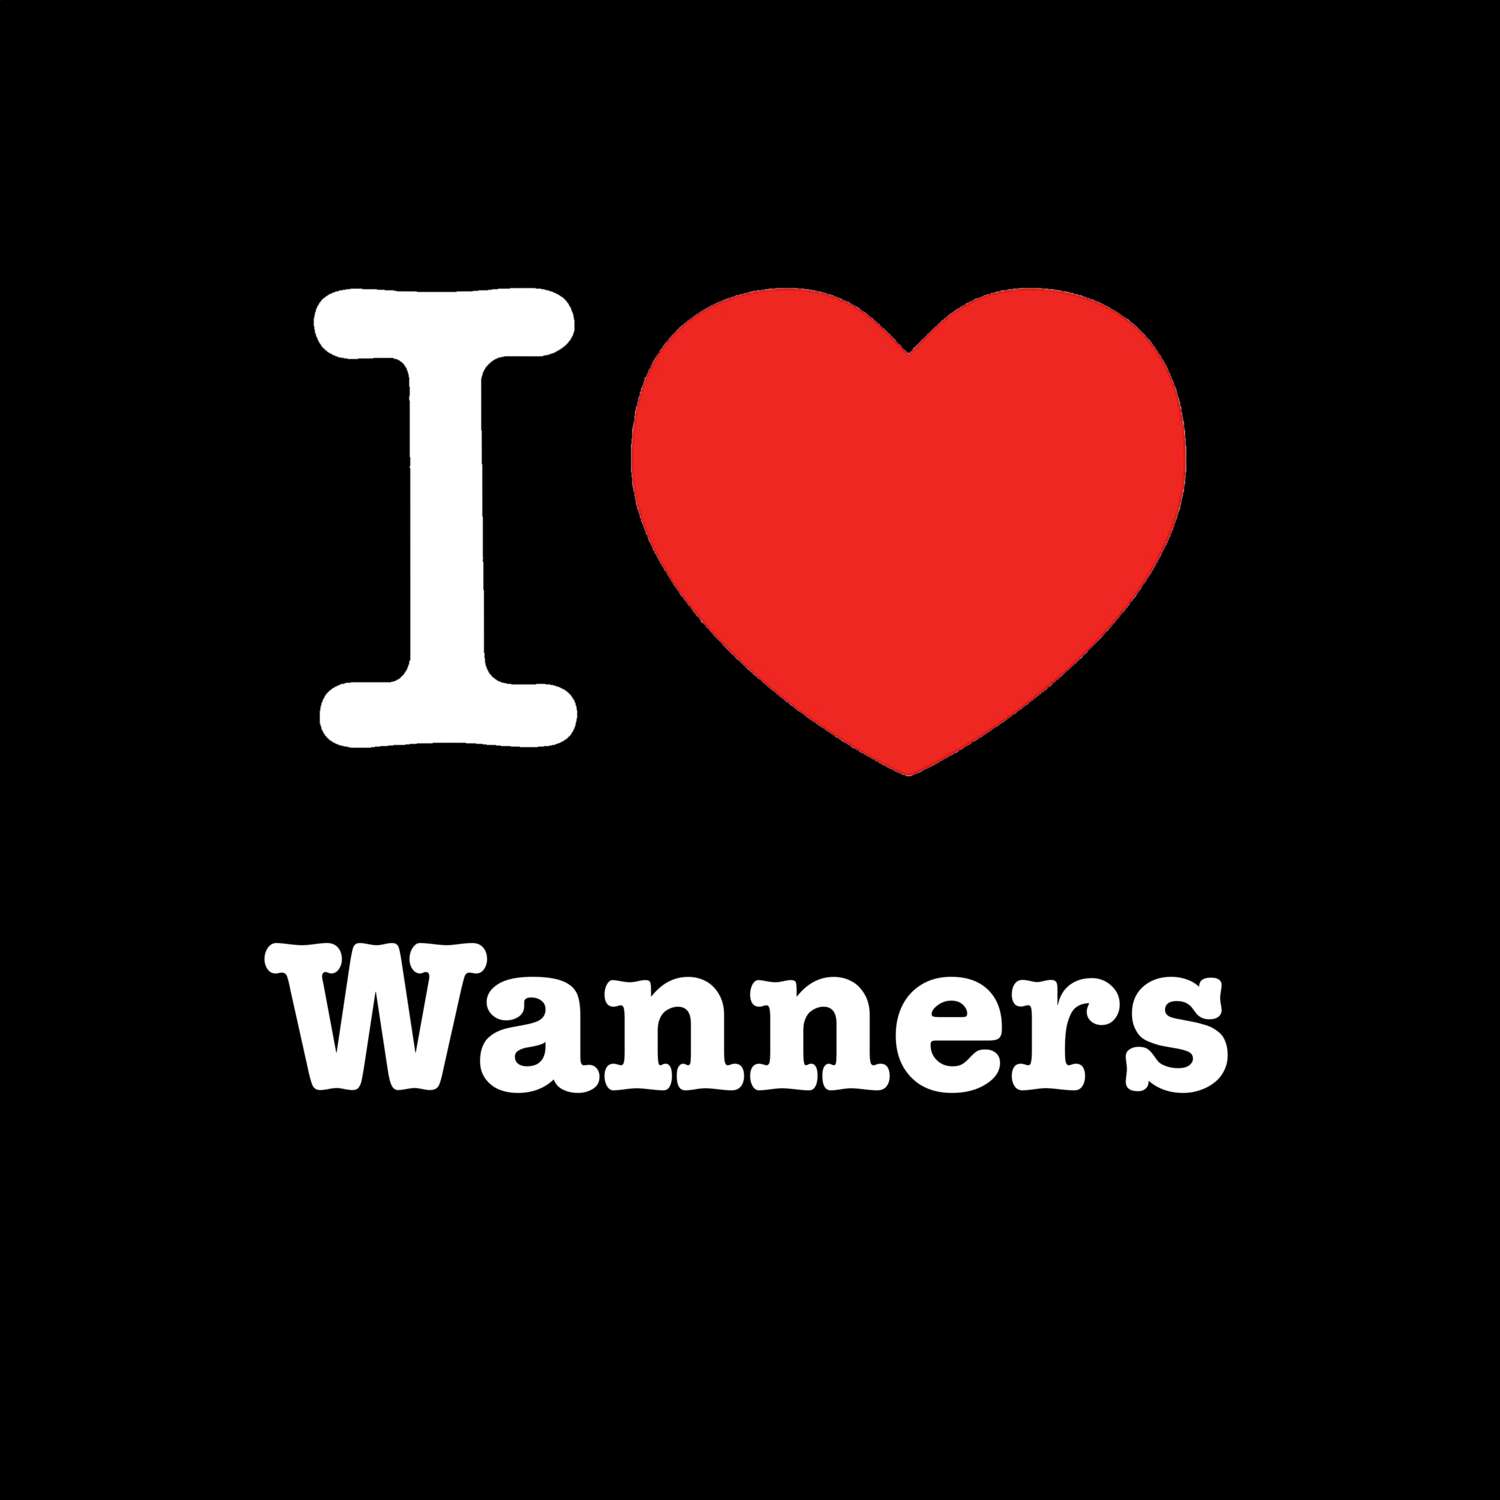 Wanners T-Shirt »I love«